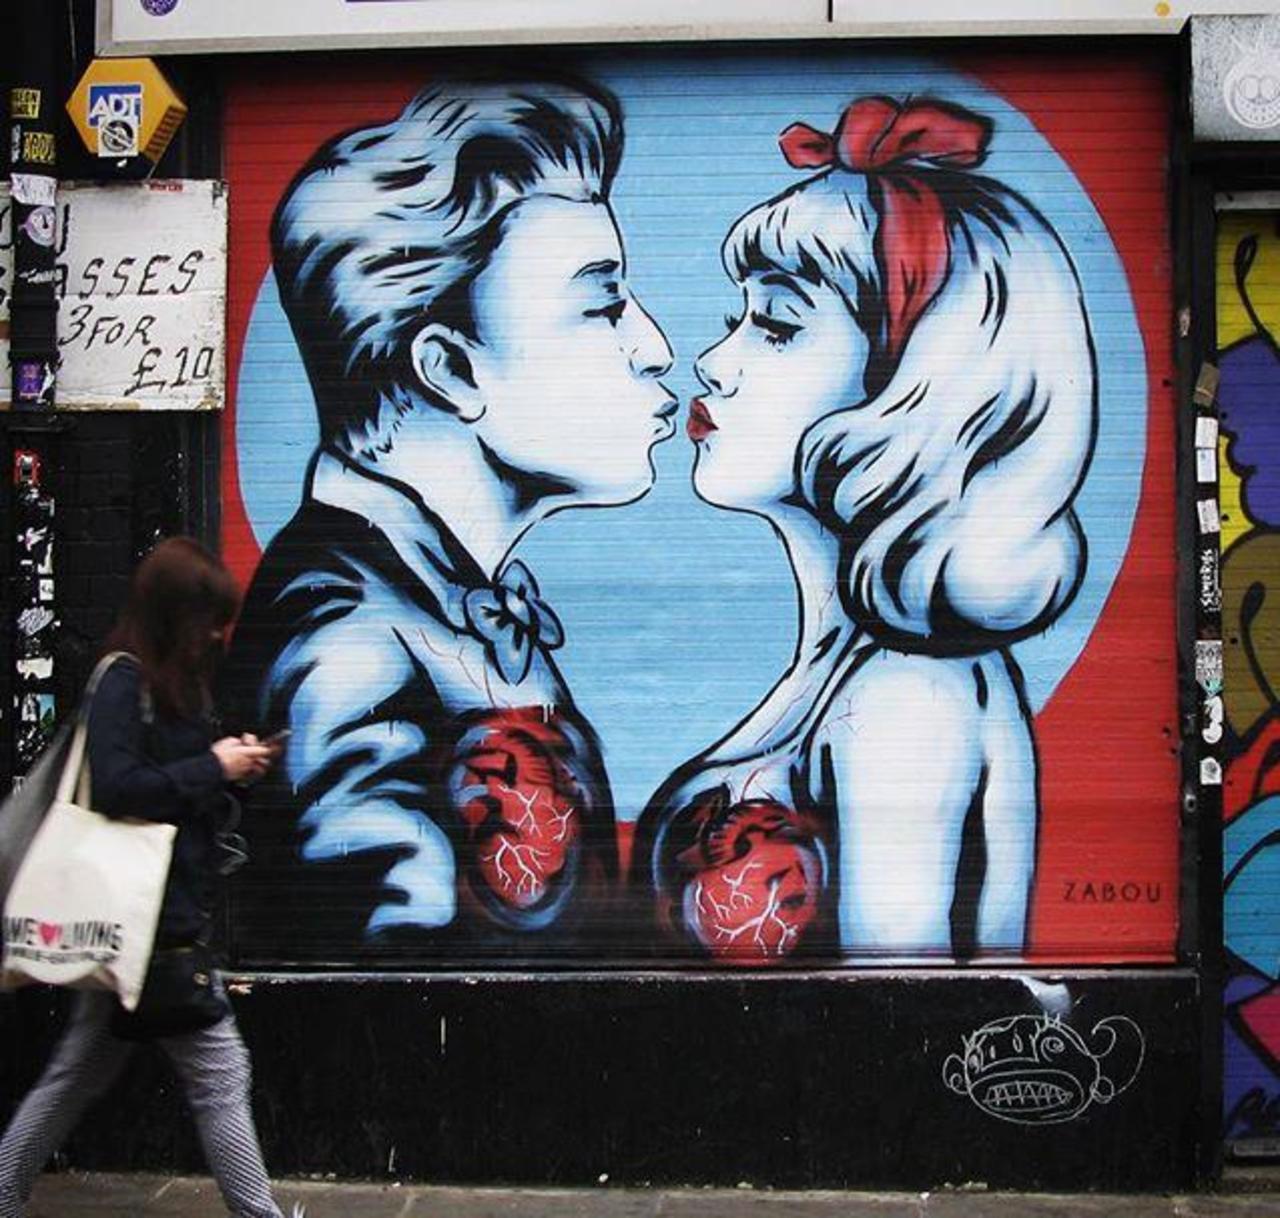 Street Art by Zabou in London

#art #arte #graffiti #streetart http://t.co/pdIFExyUiC